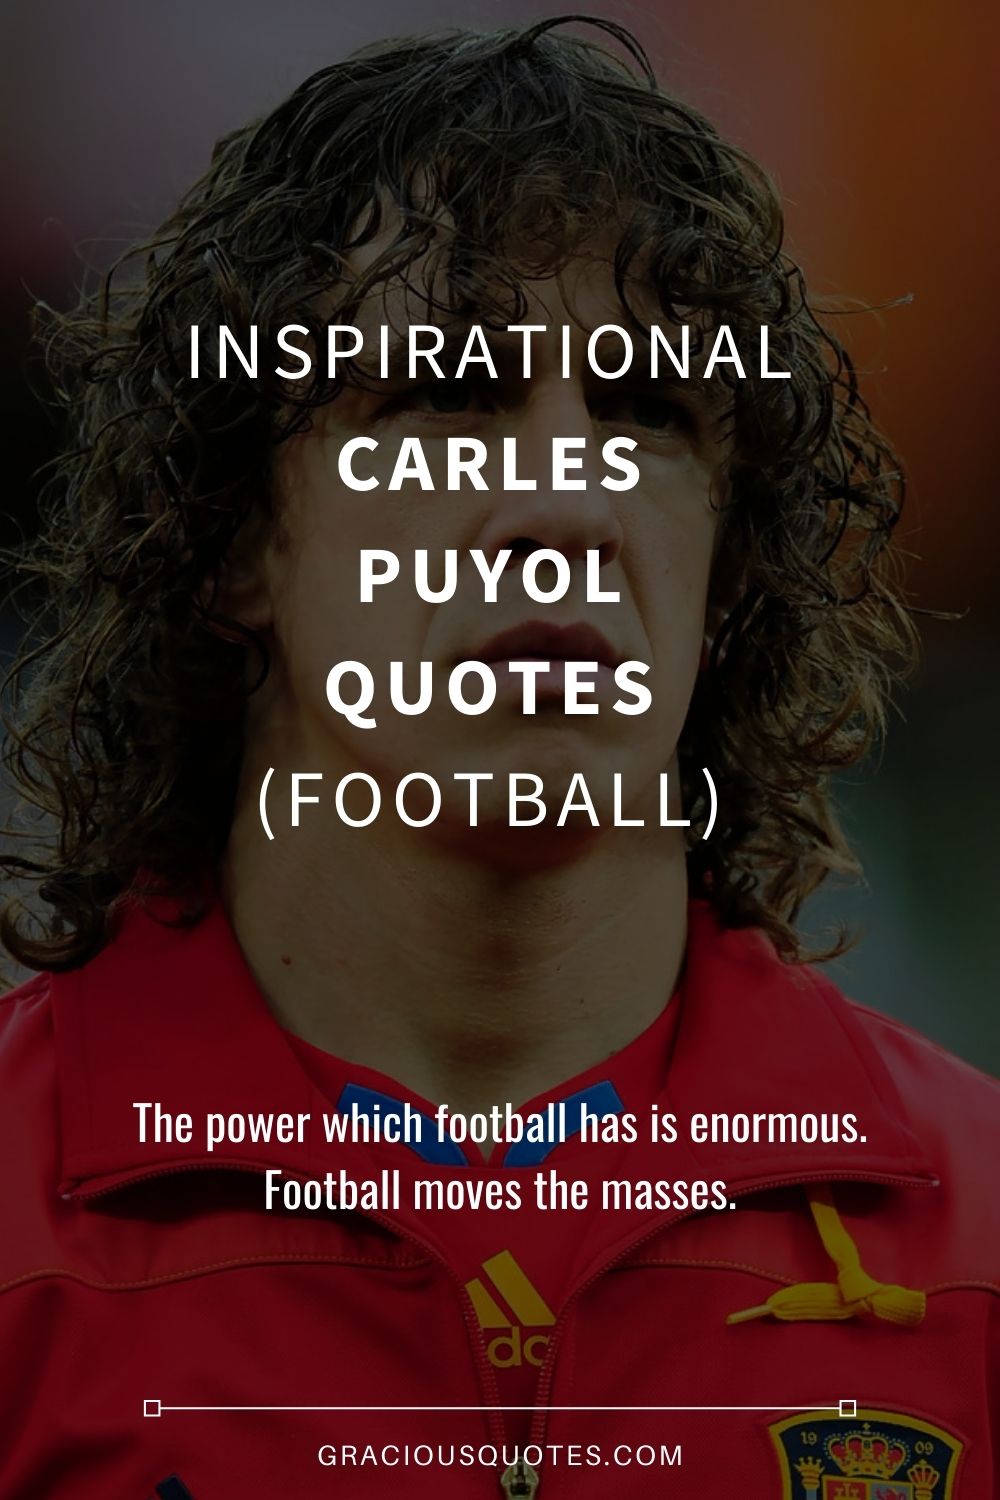 Inspirational Carles Puyol Quotes (FOOTBALL) - Gracious Quotes